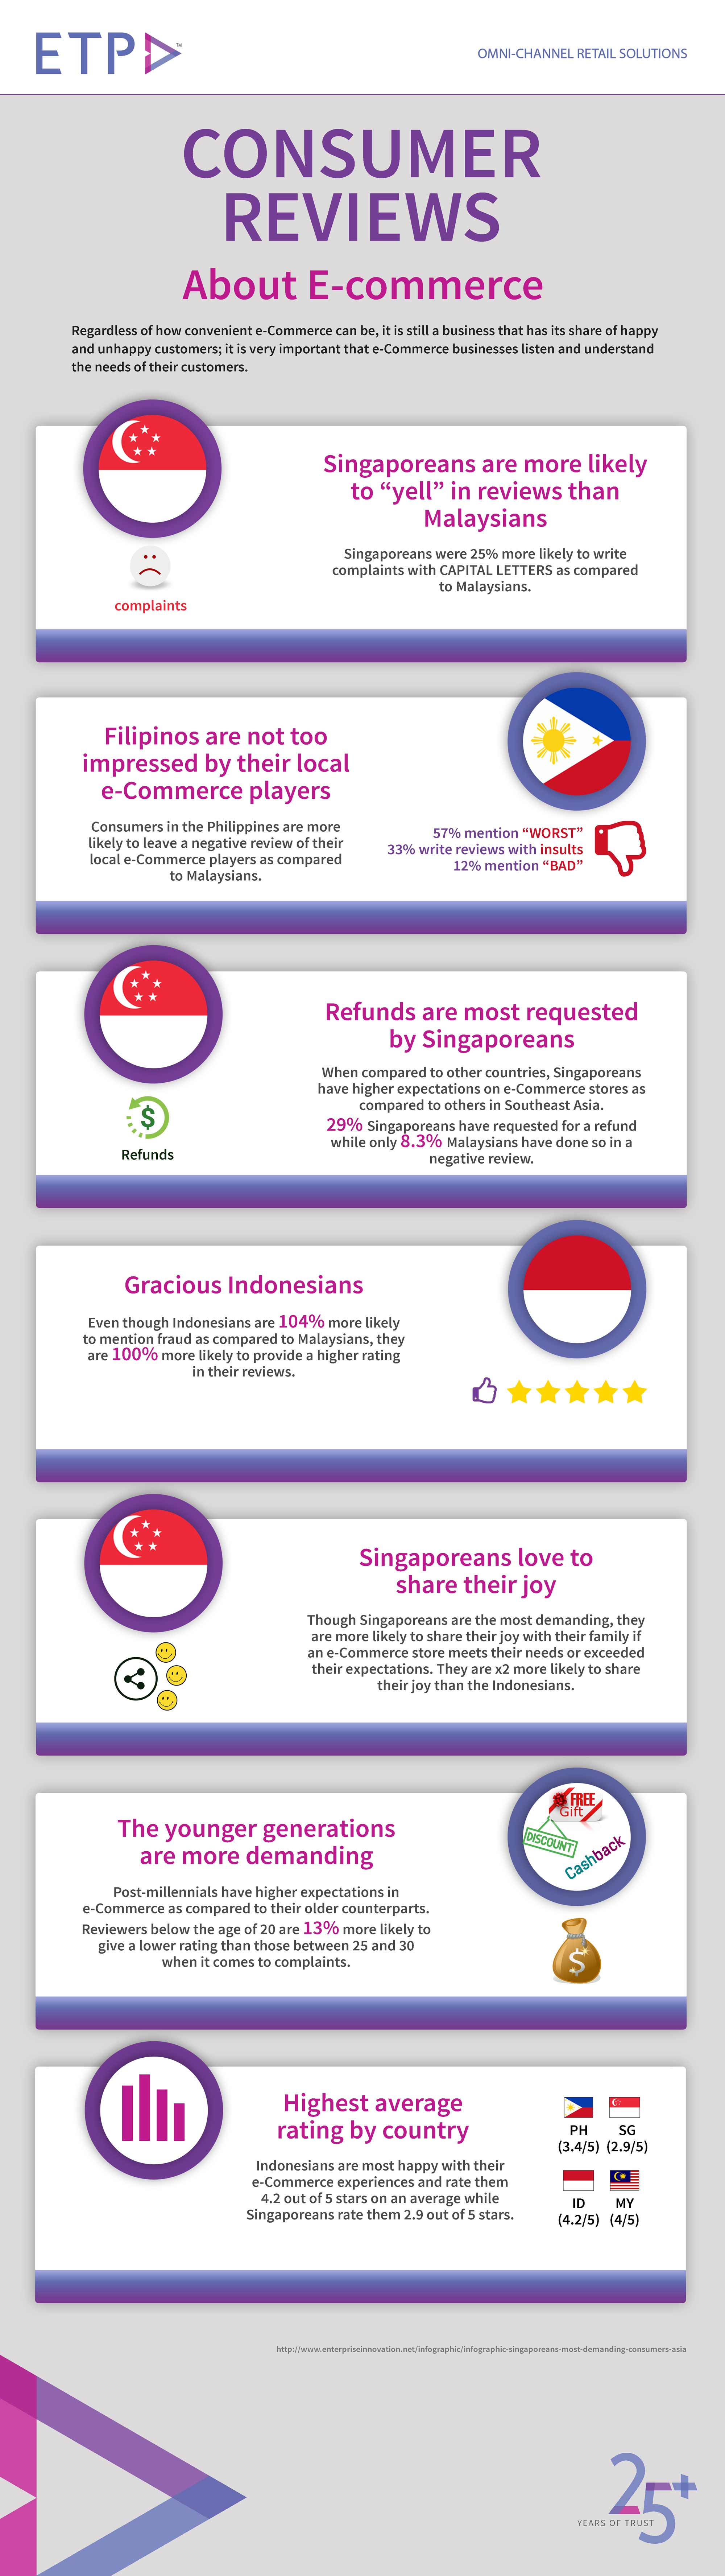 ETP Blog Southeast Asian Consumers e-Commerce Reviews Infographic